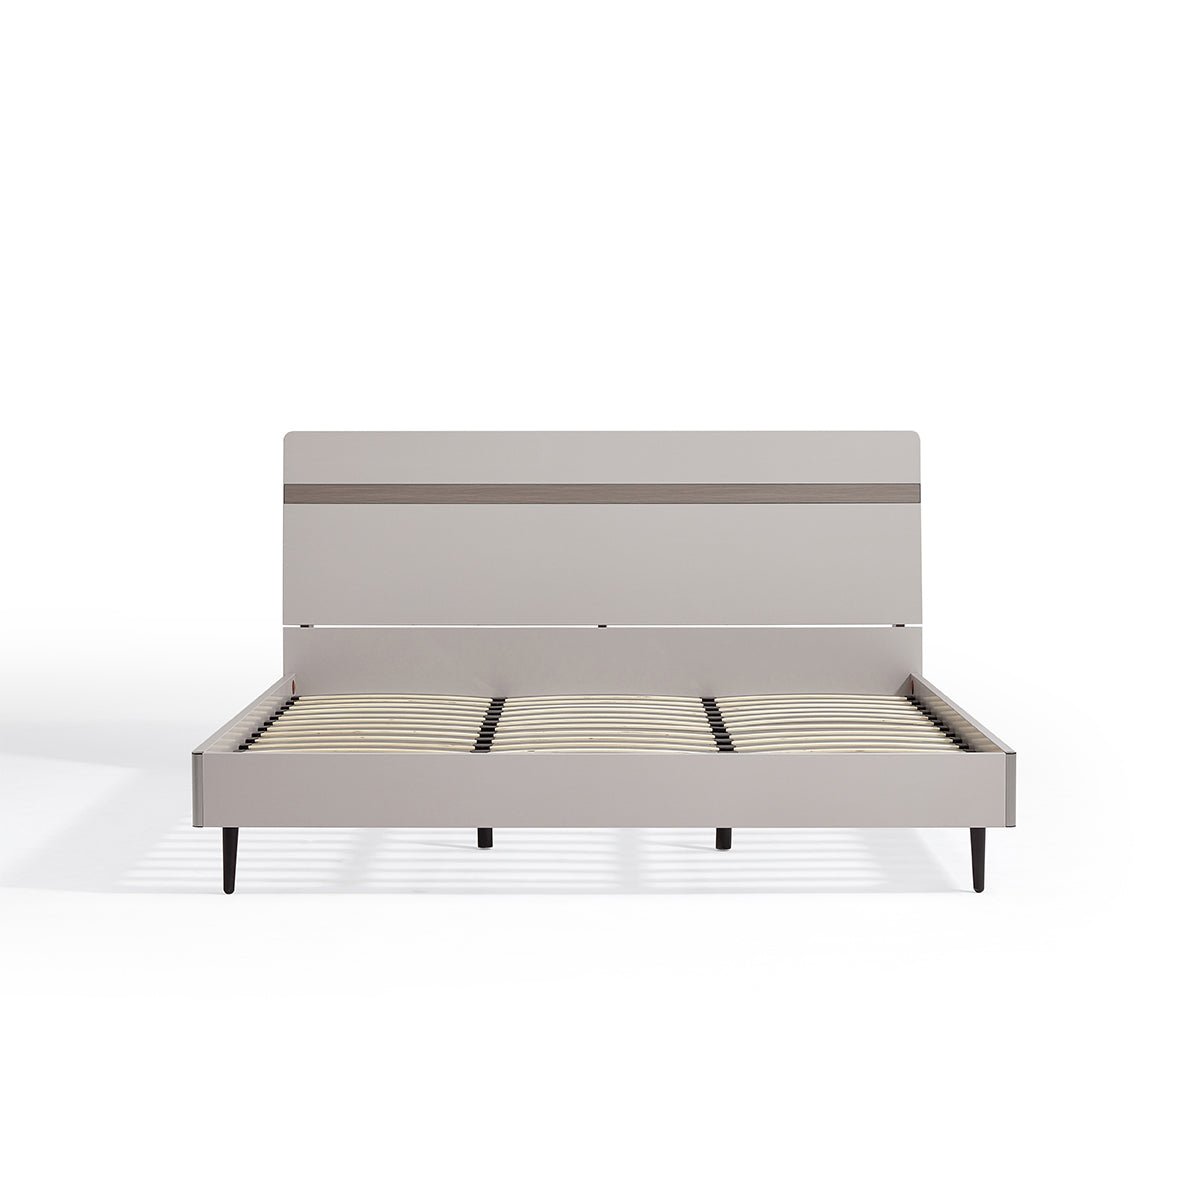 MOE Grey Bed With Mattress Set - 0cm